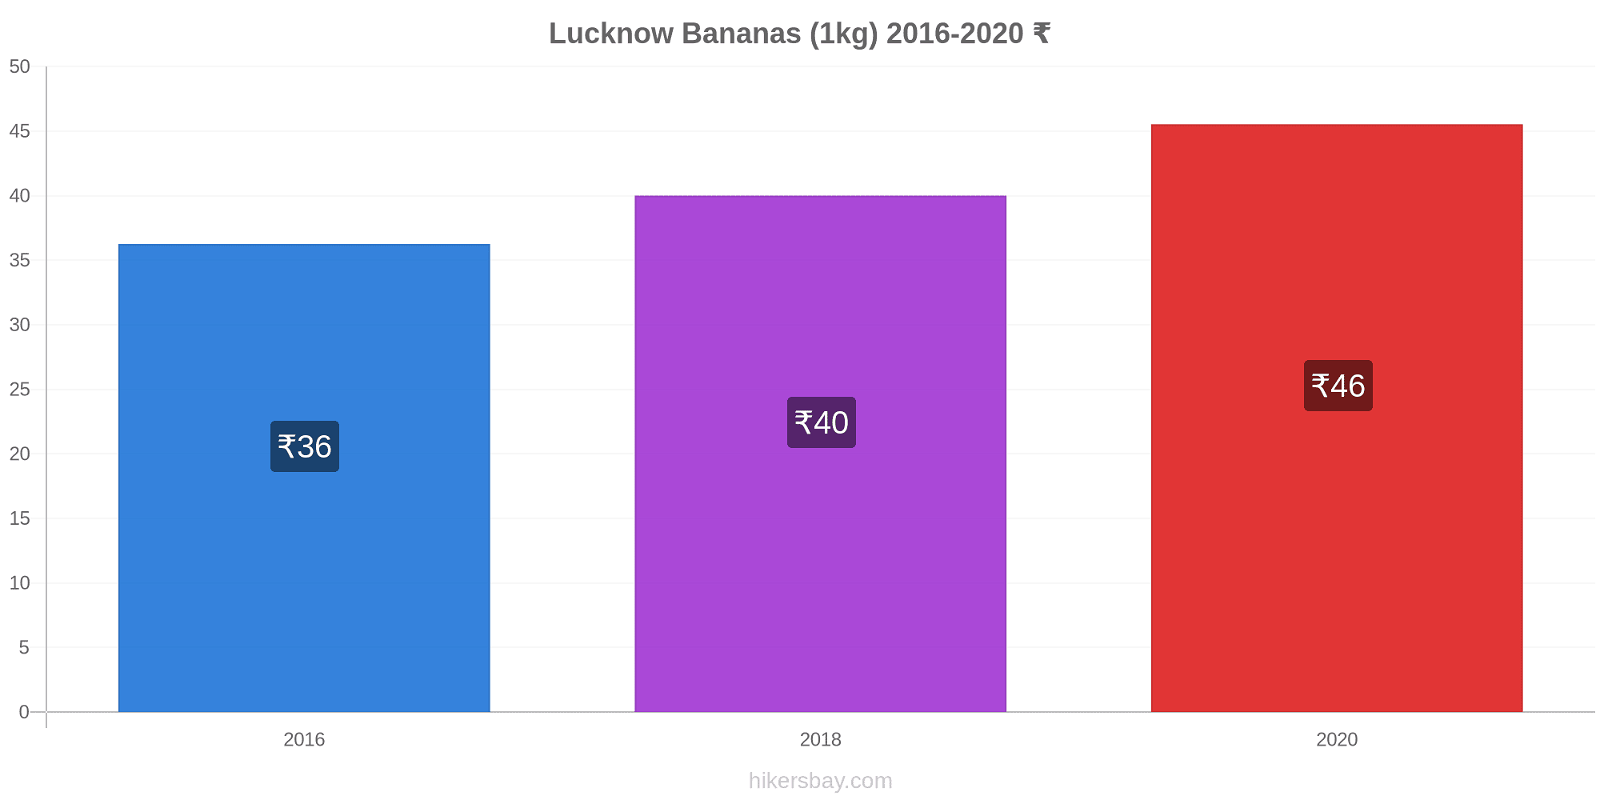 Lucknow price changes Bananas (1kg) hikersbay.com